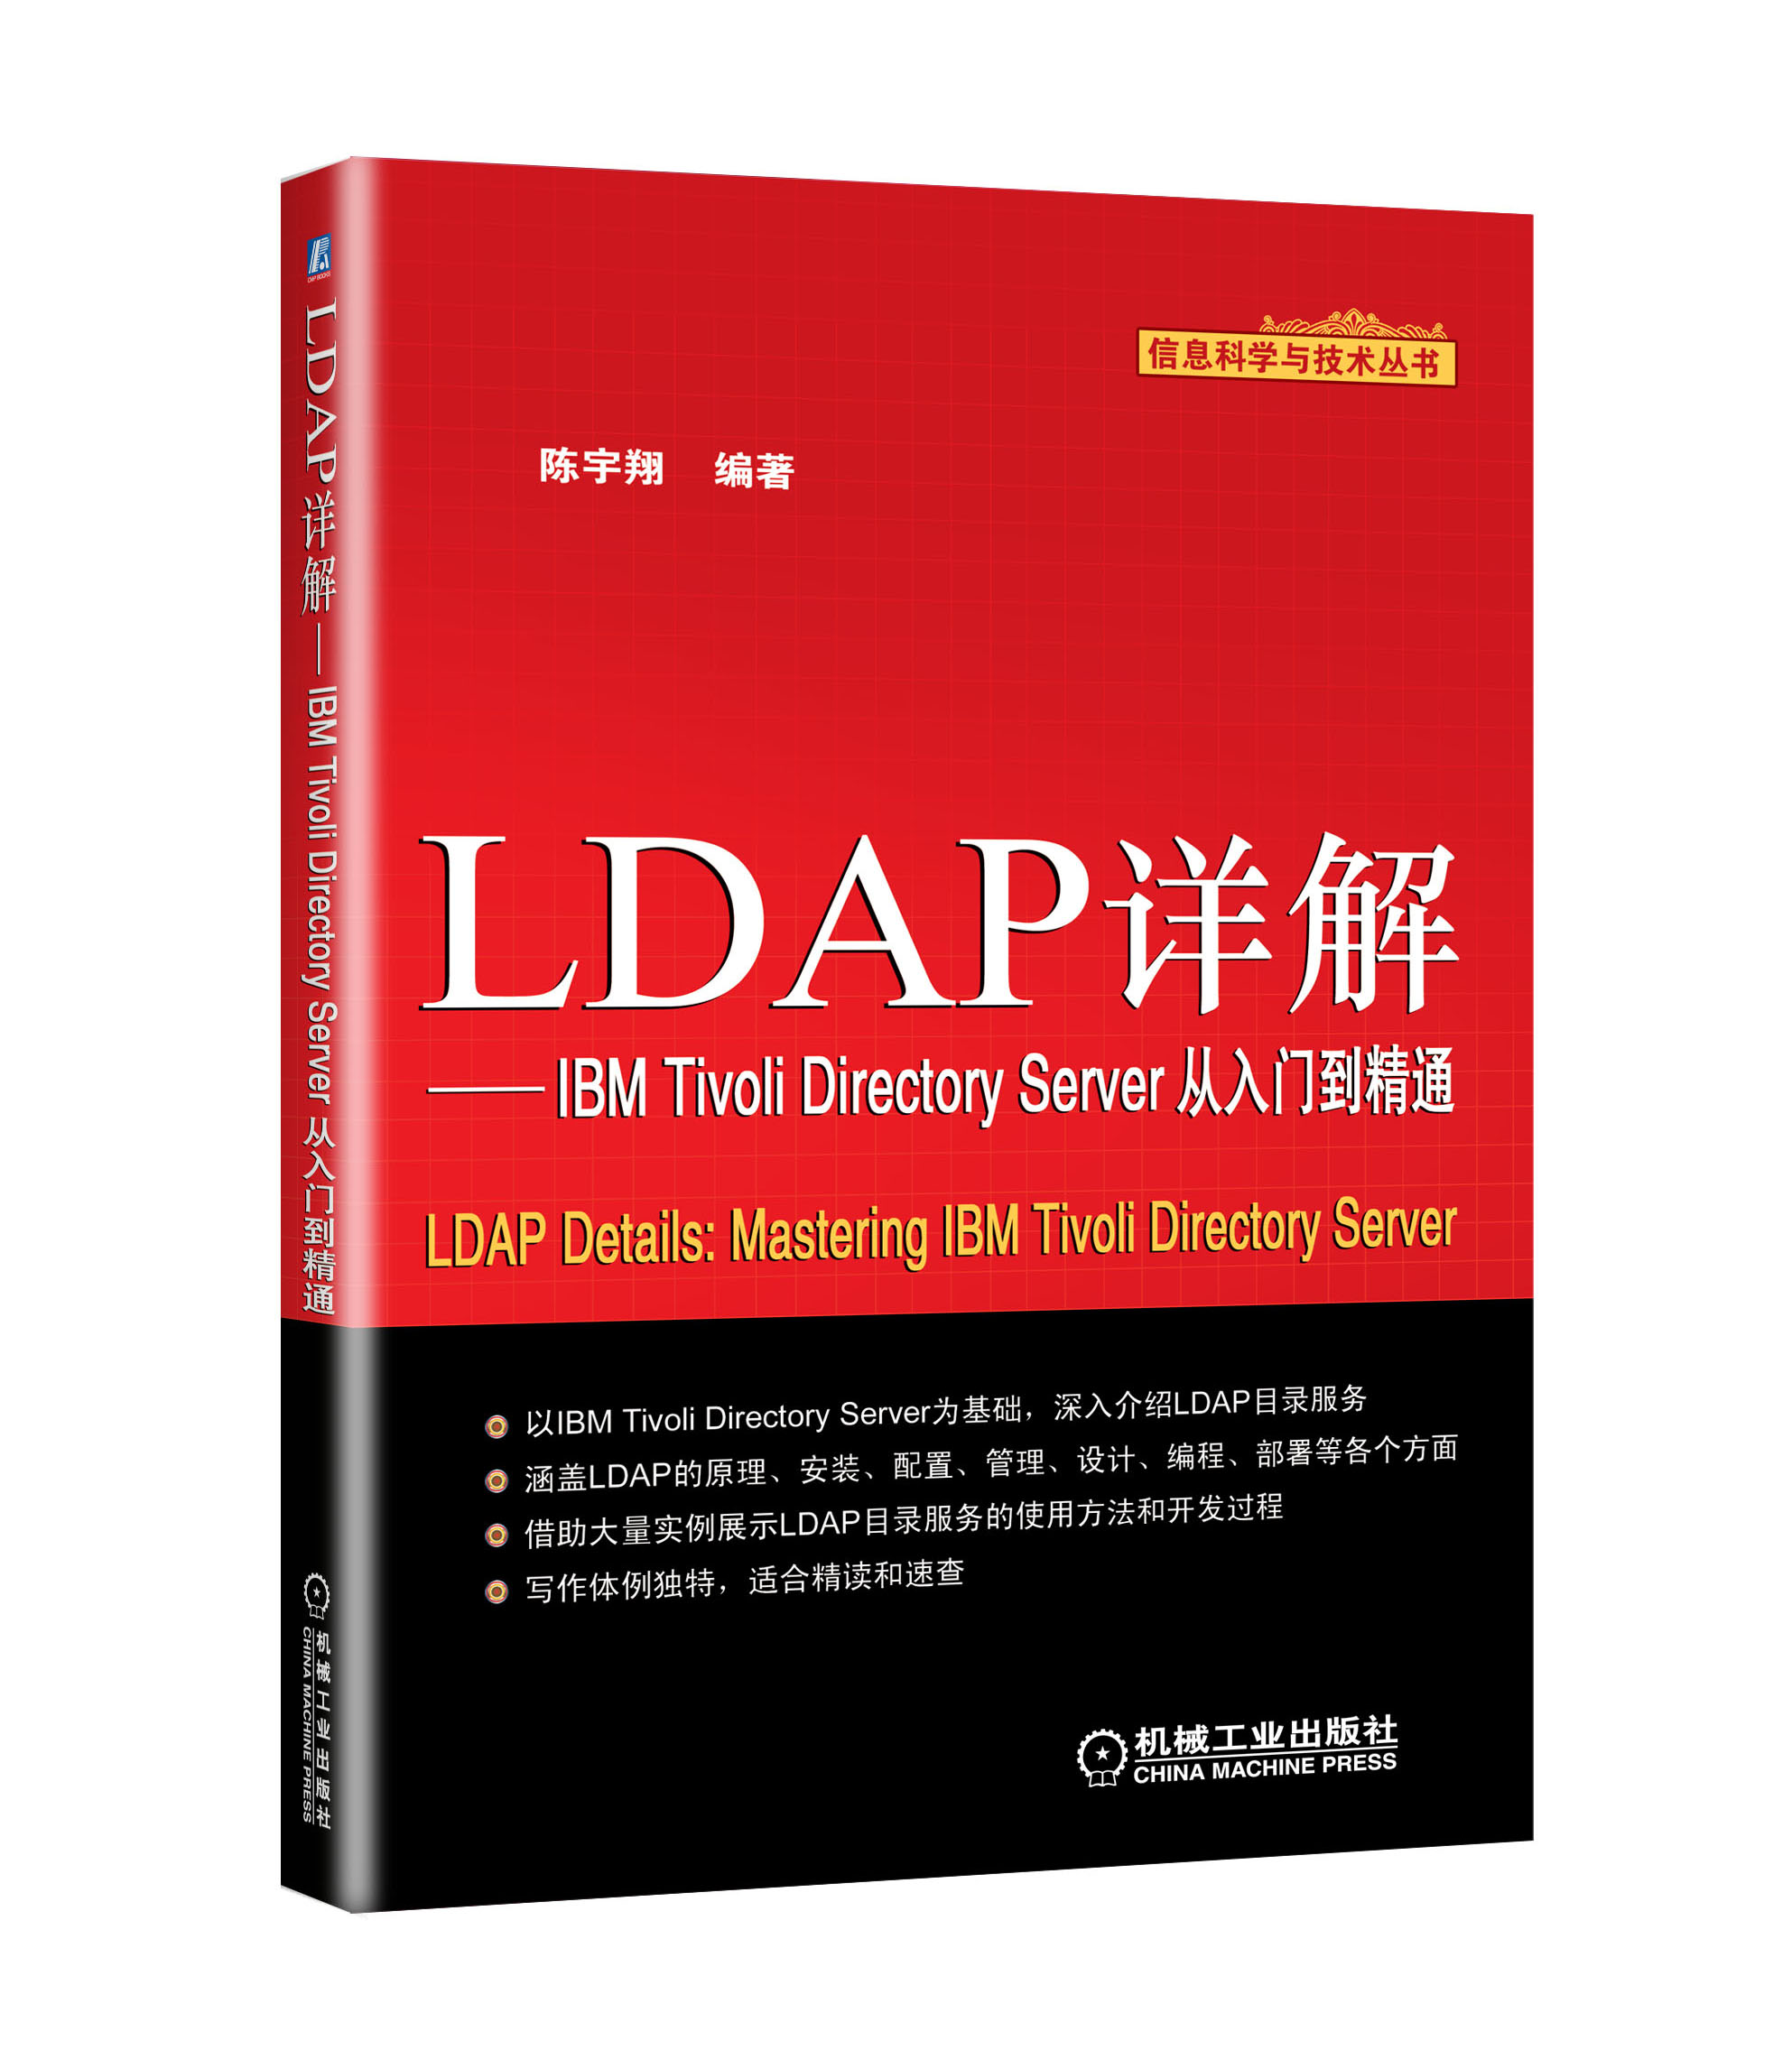 LDAP詳解：IBM Tivoli Directory Server從入門到精通